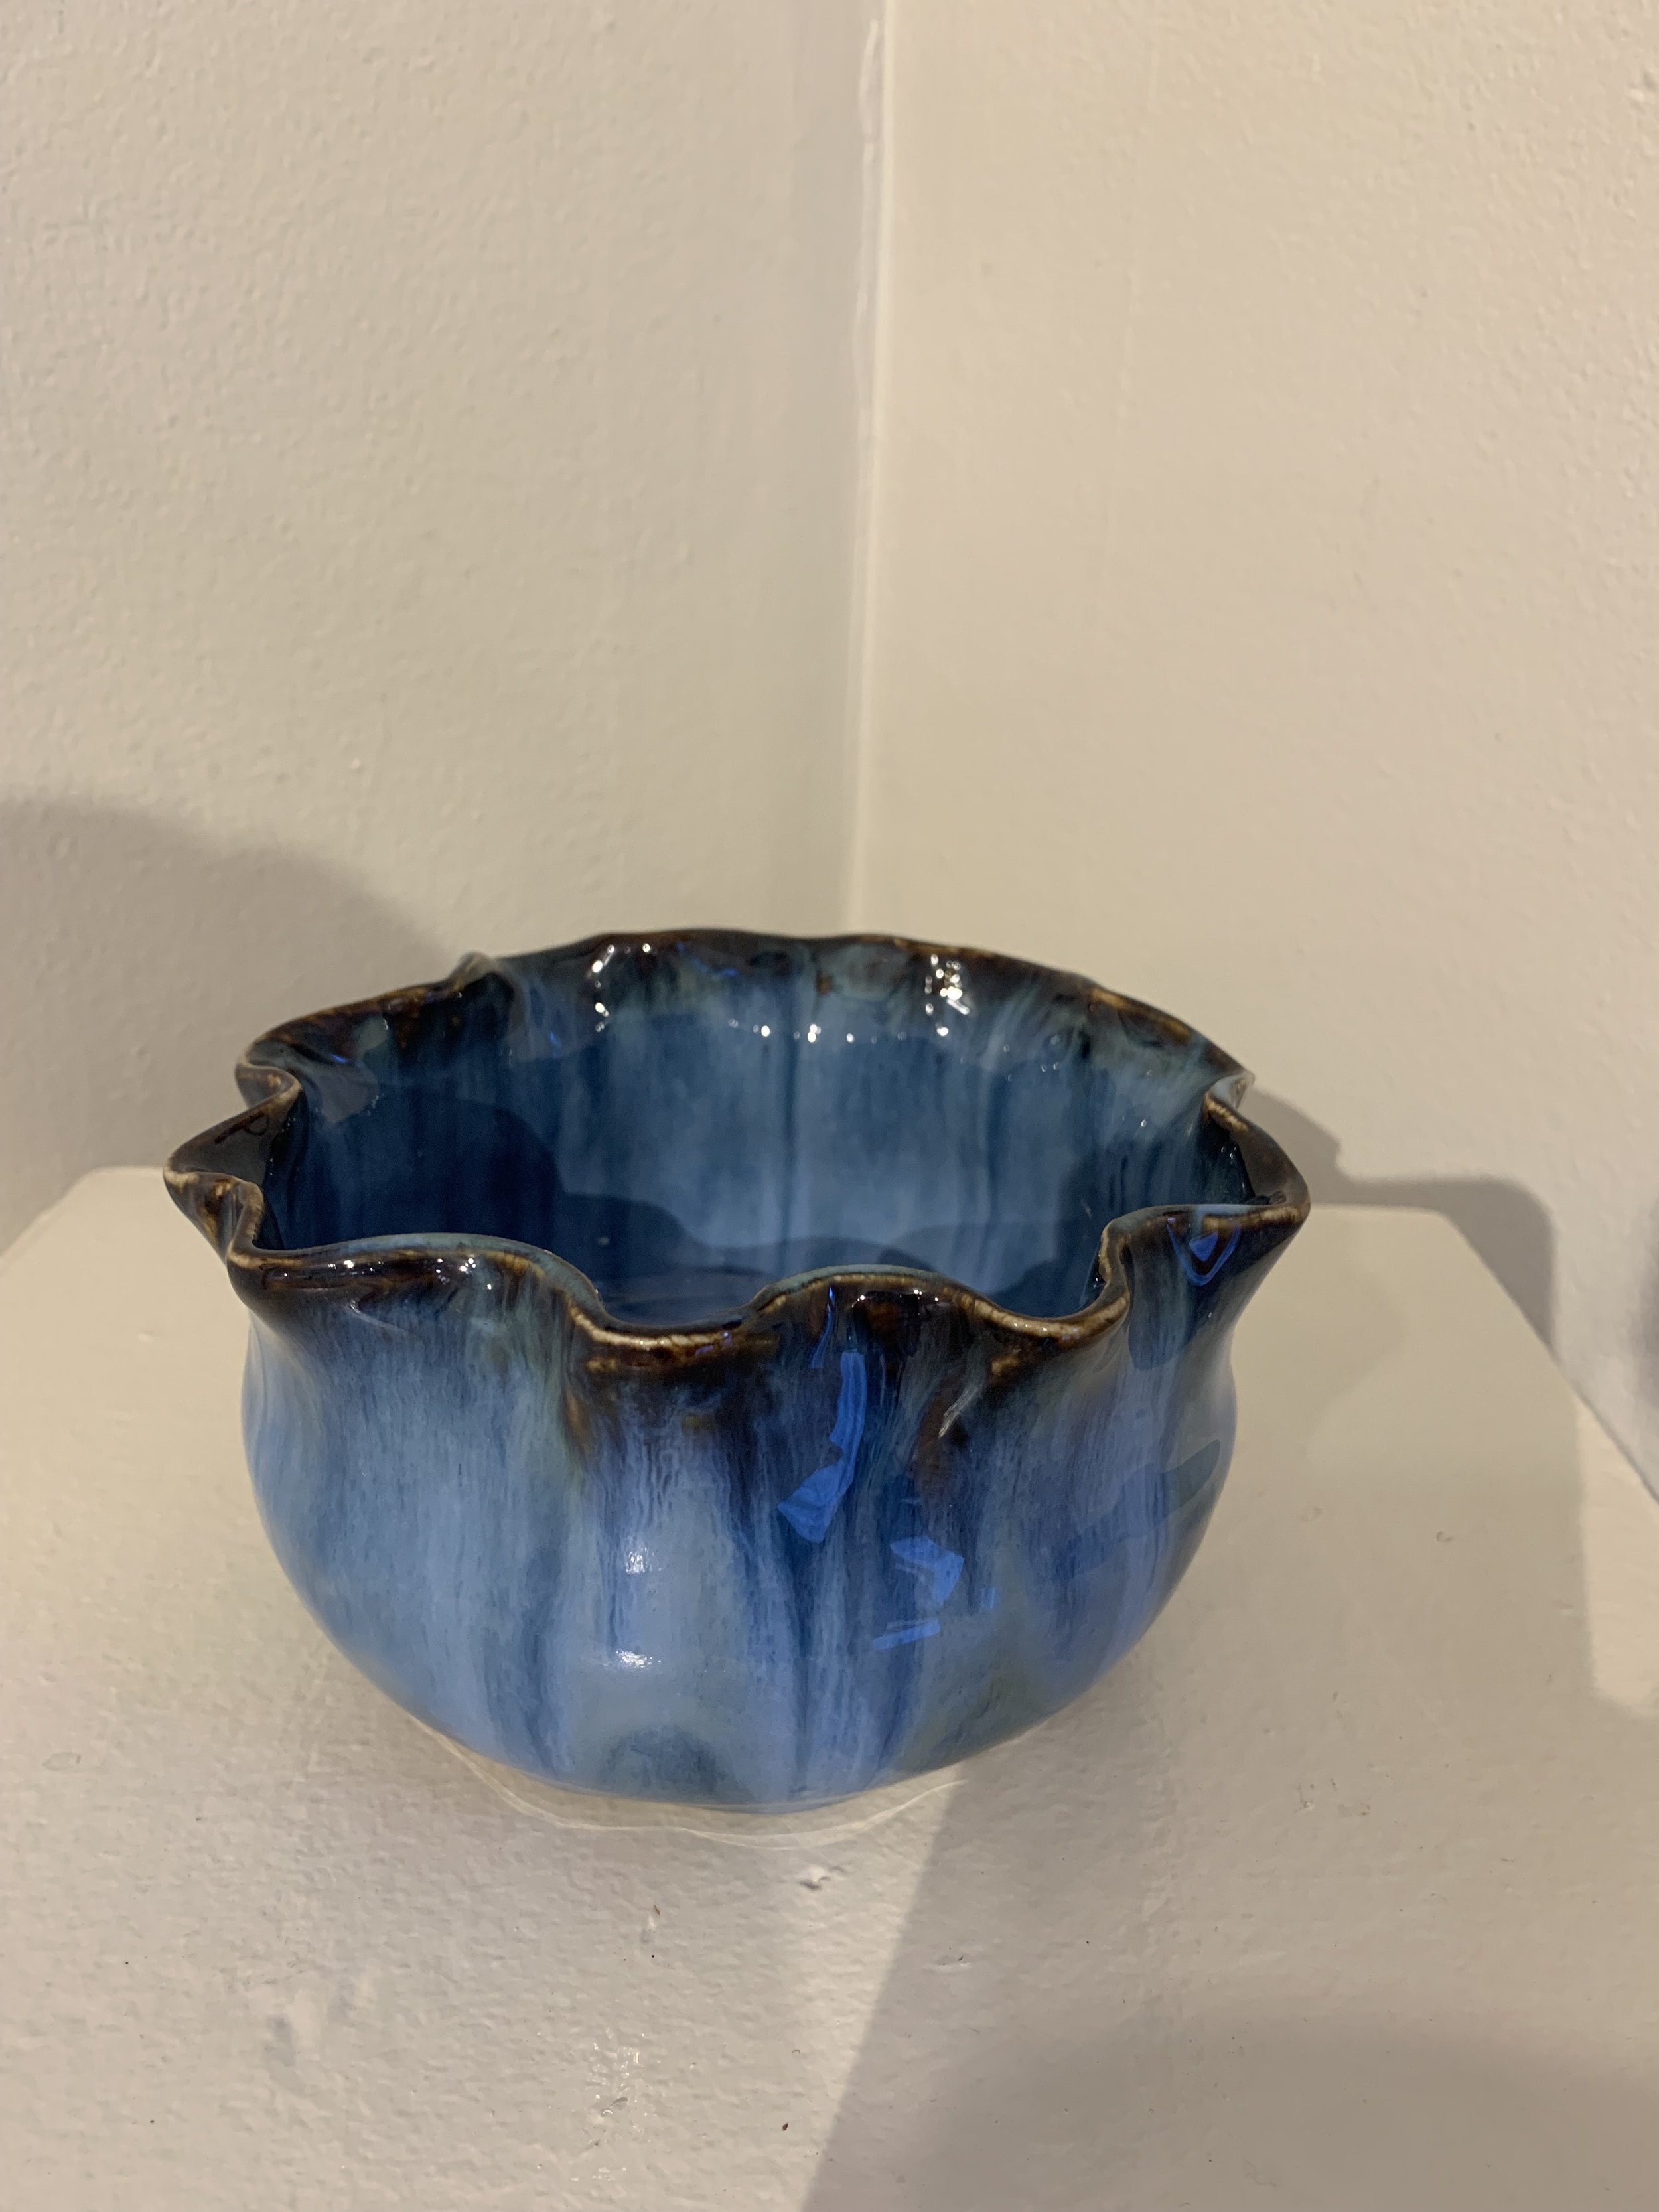 Donna	Chase	Blue Waves	Pottery	$30 	Amy Bourbon